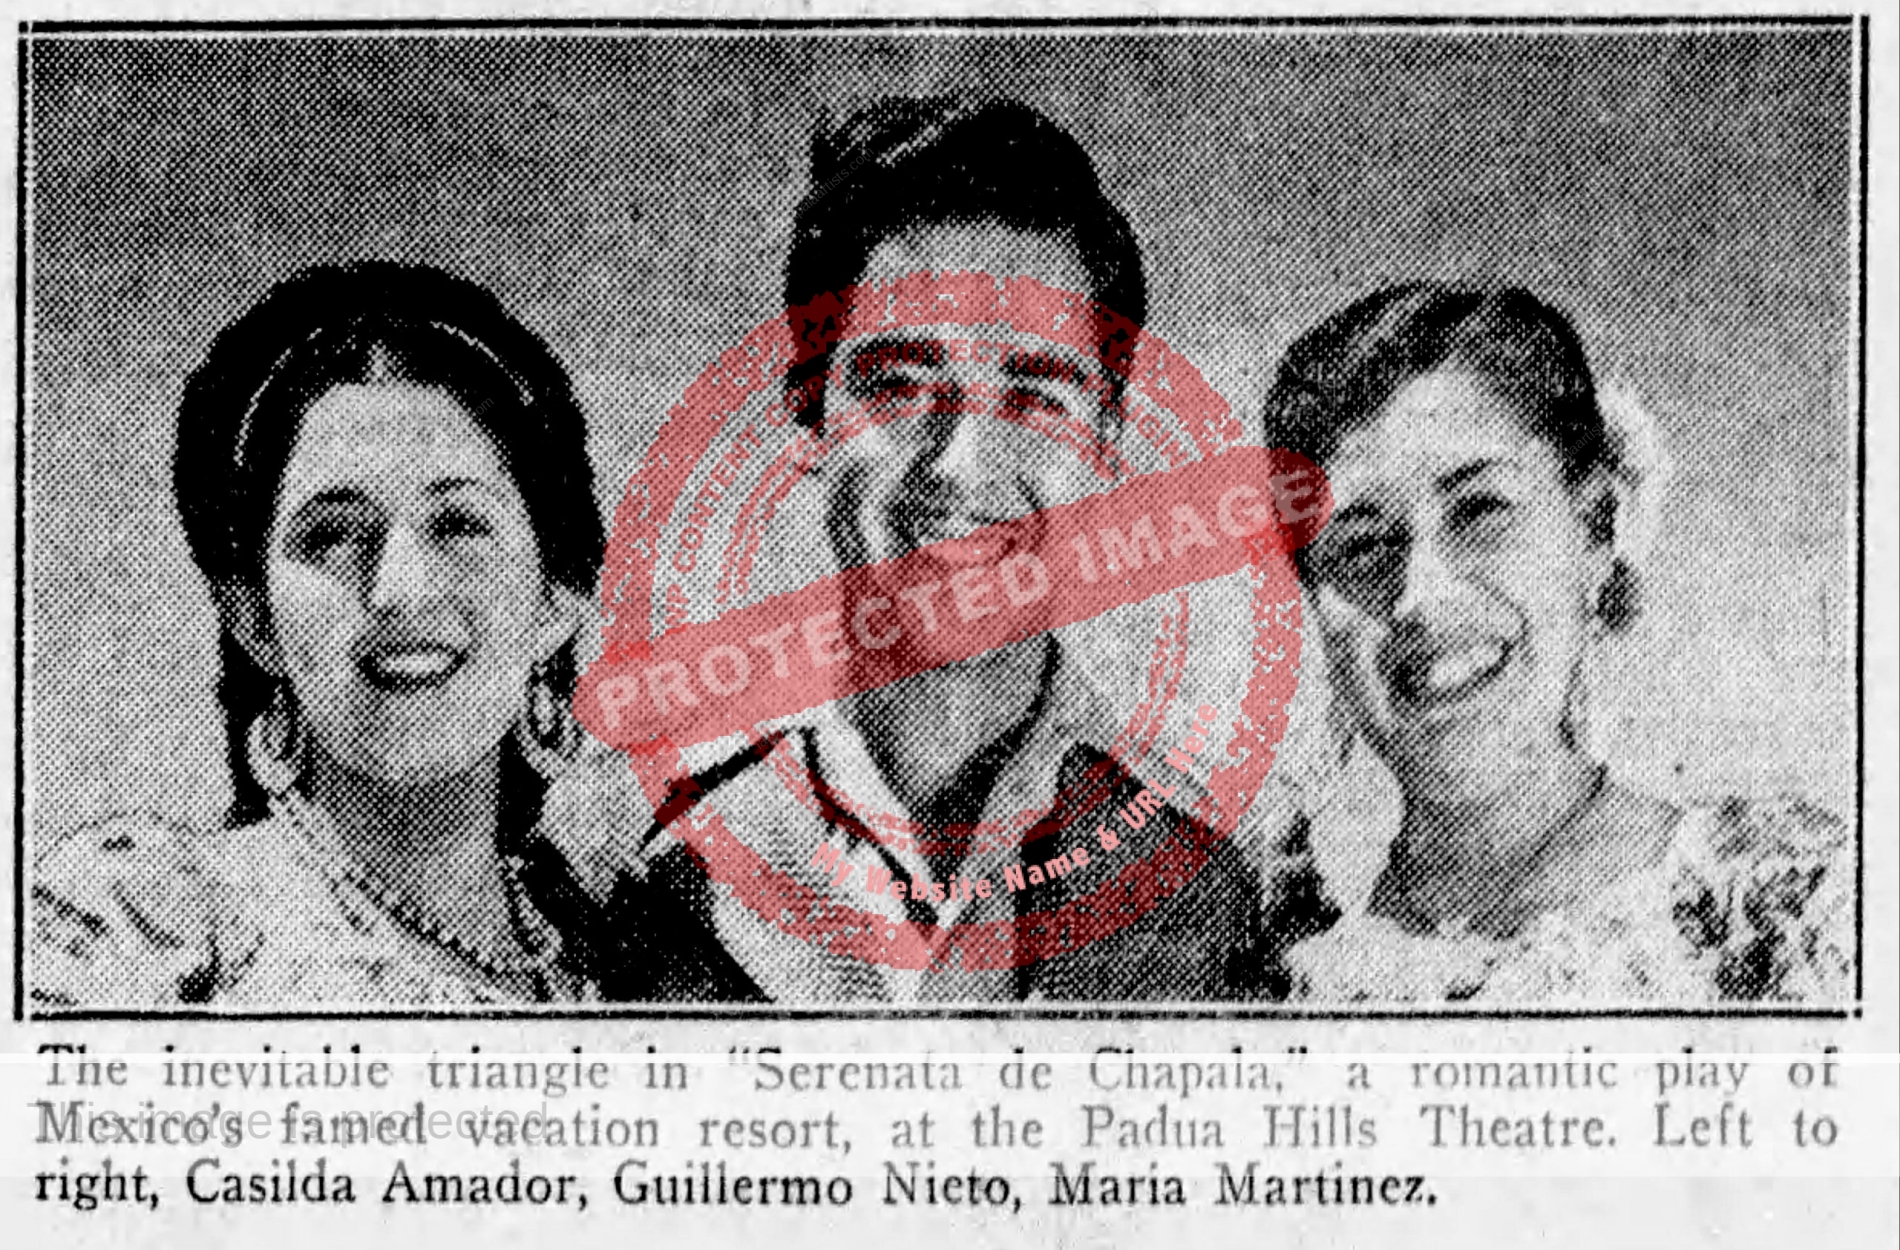 "Serenata de Chapala" (Redlands Daily Facts, 14 Aug 1939)